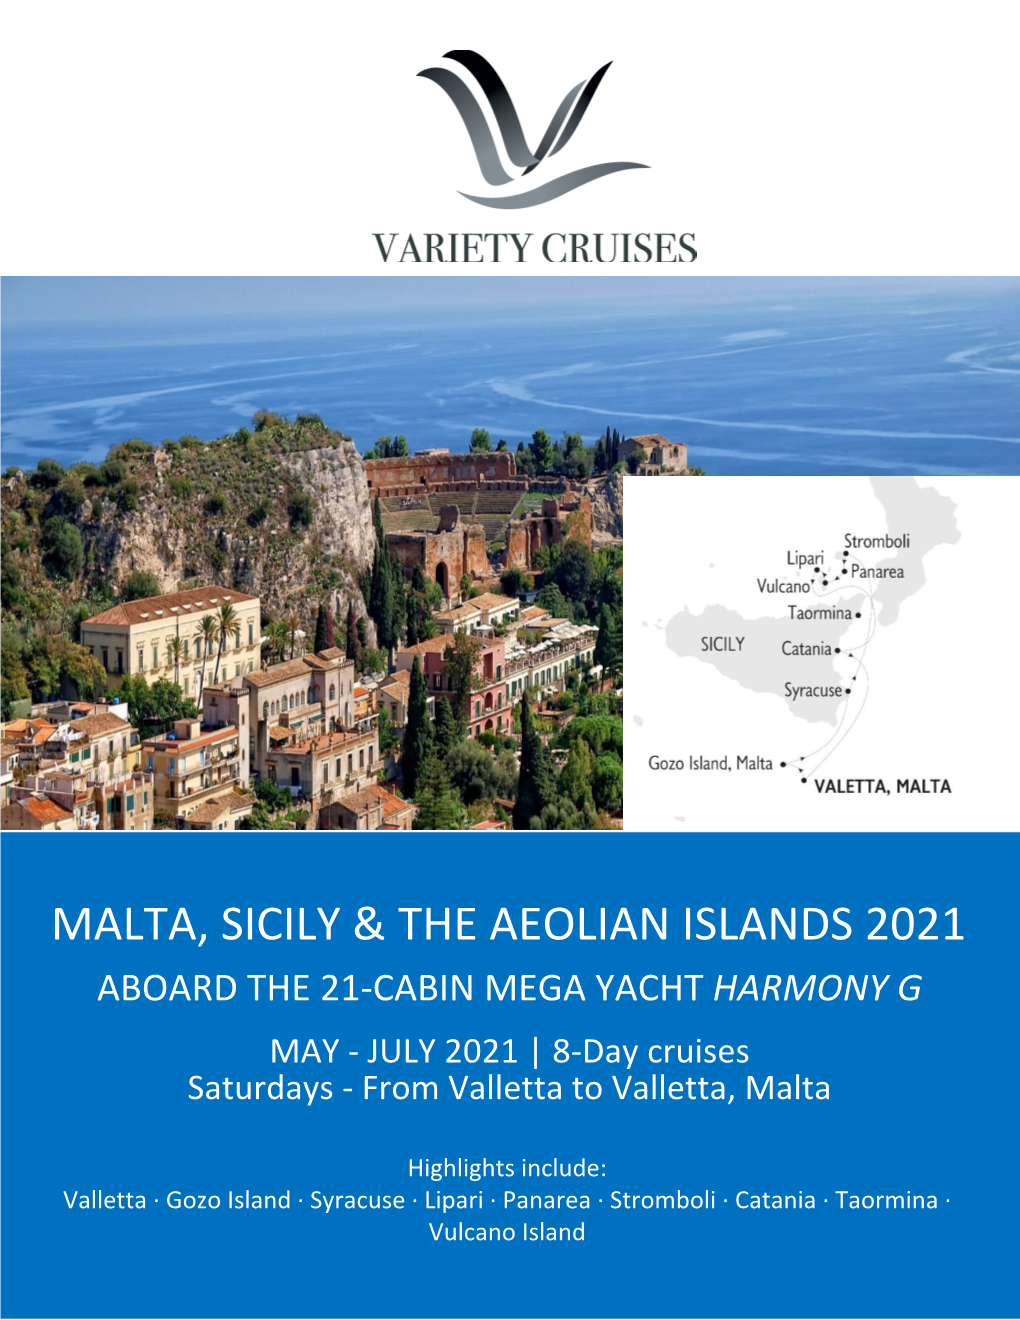 Malta, Sicily & the Aeolian Islands 2021